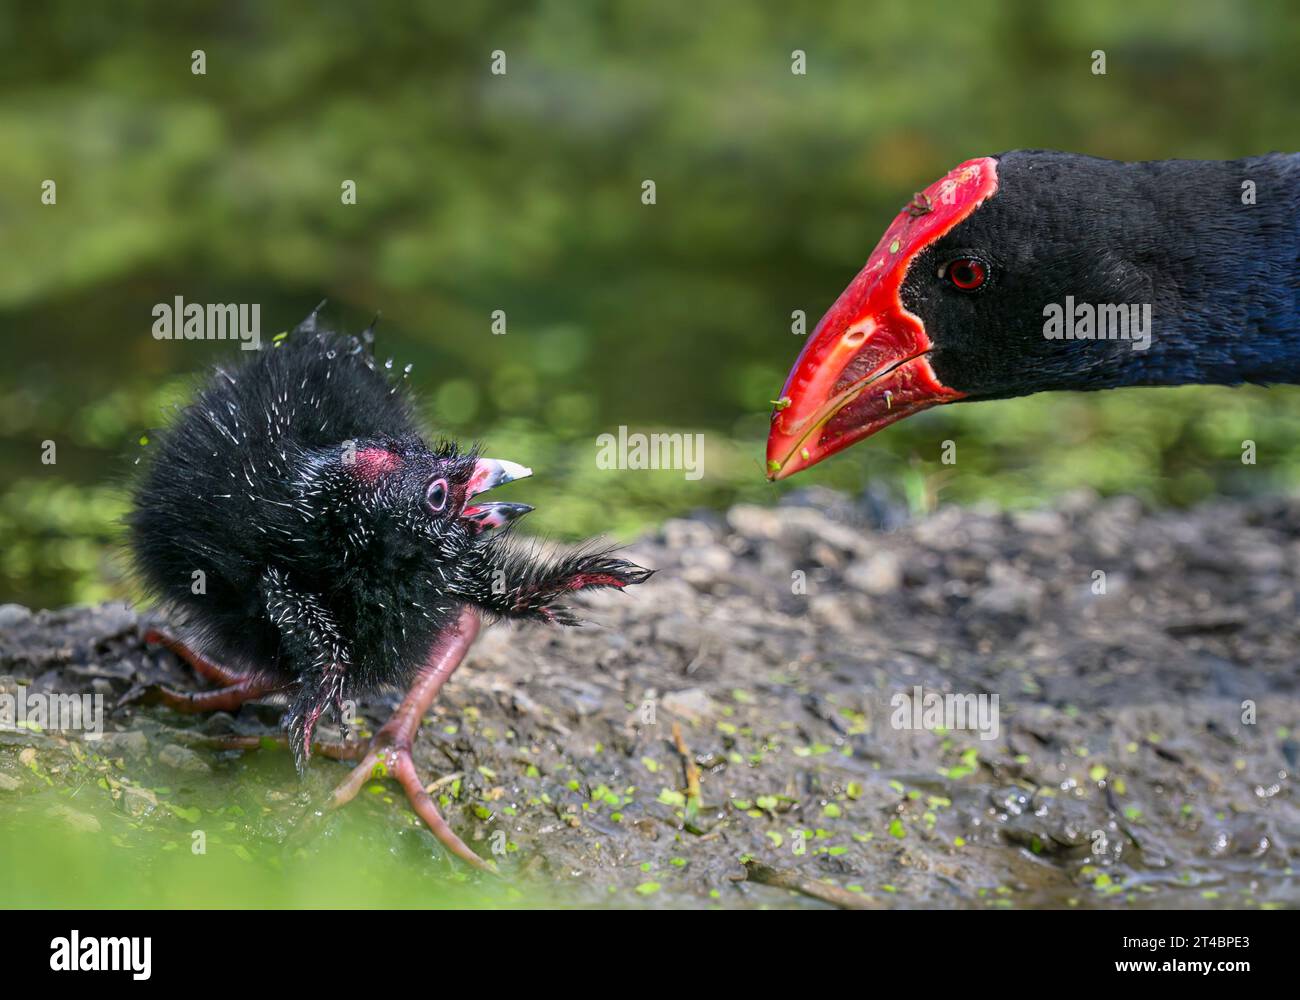 Baby Pukeko bird turning its head to greet mother Pukeko. Western Springs park, Auckland. Stock Photo